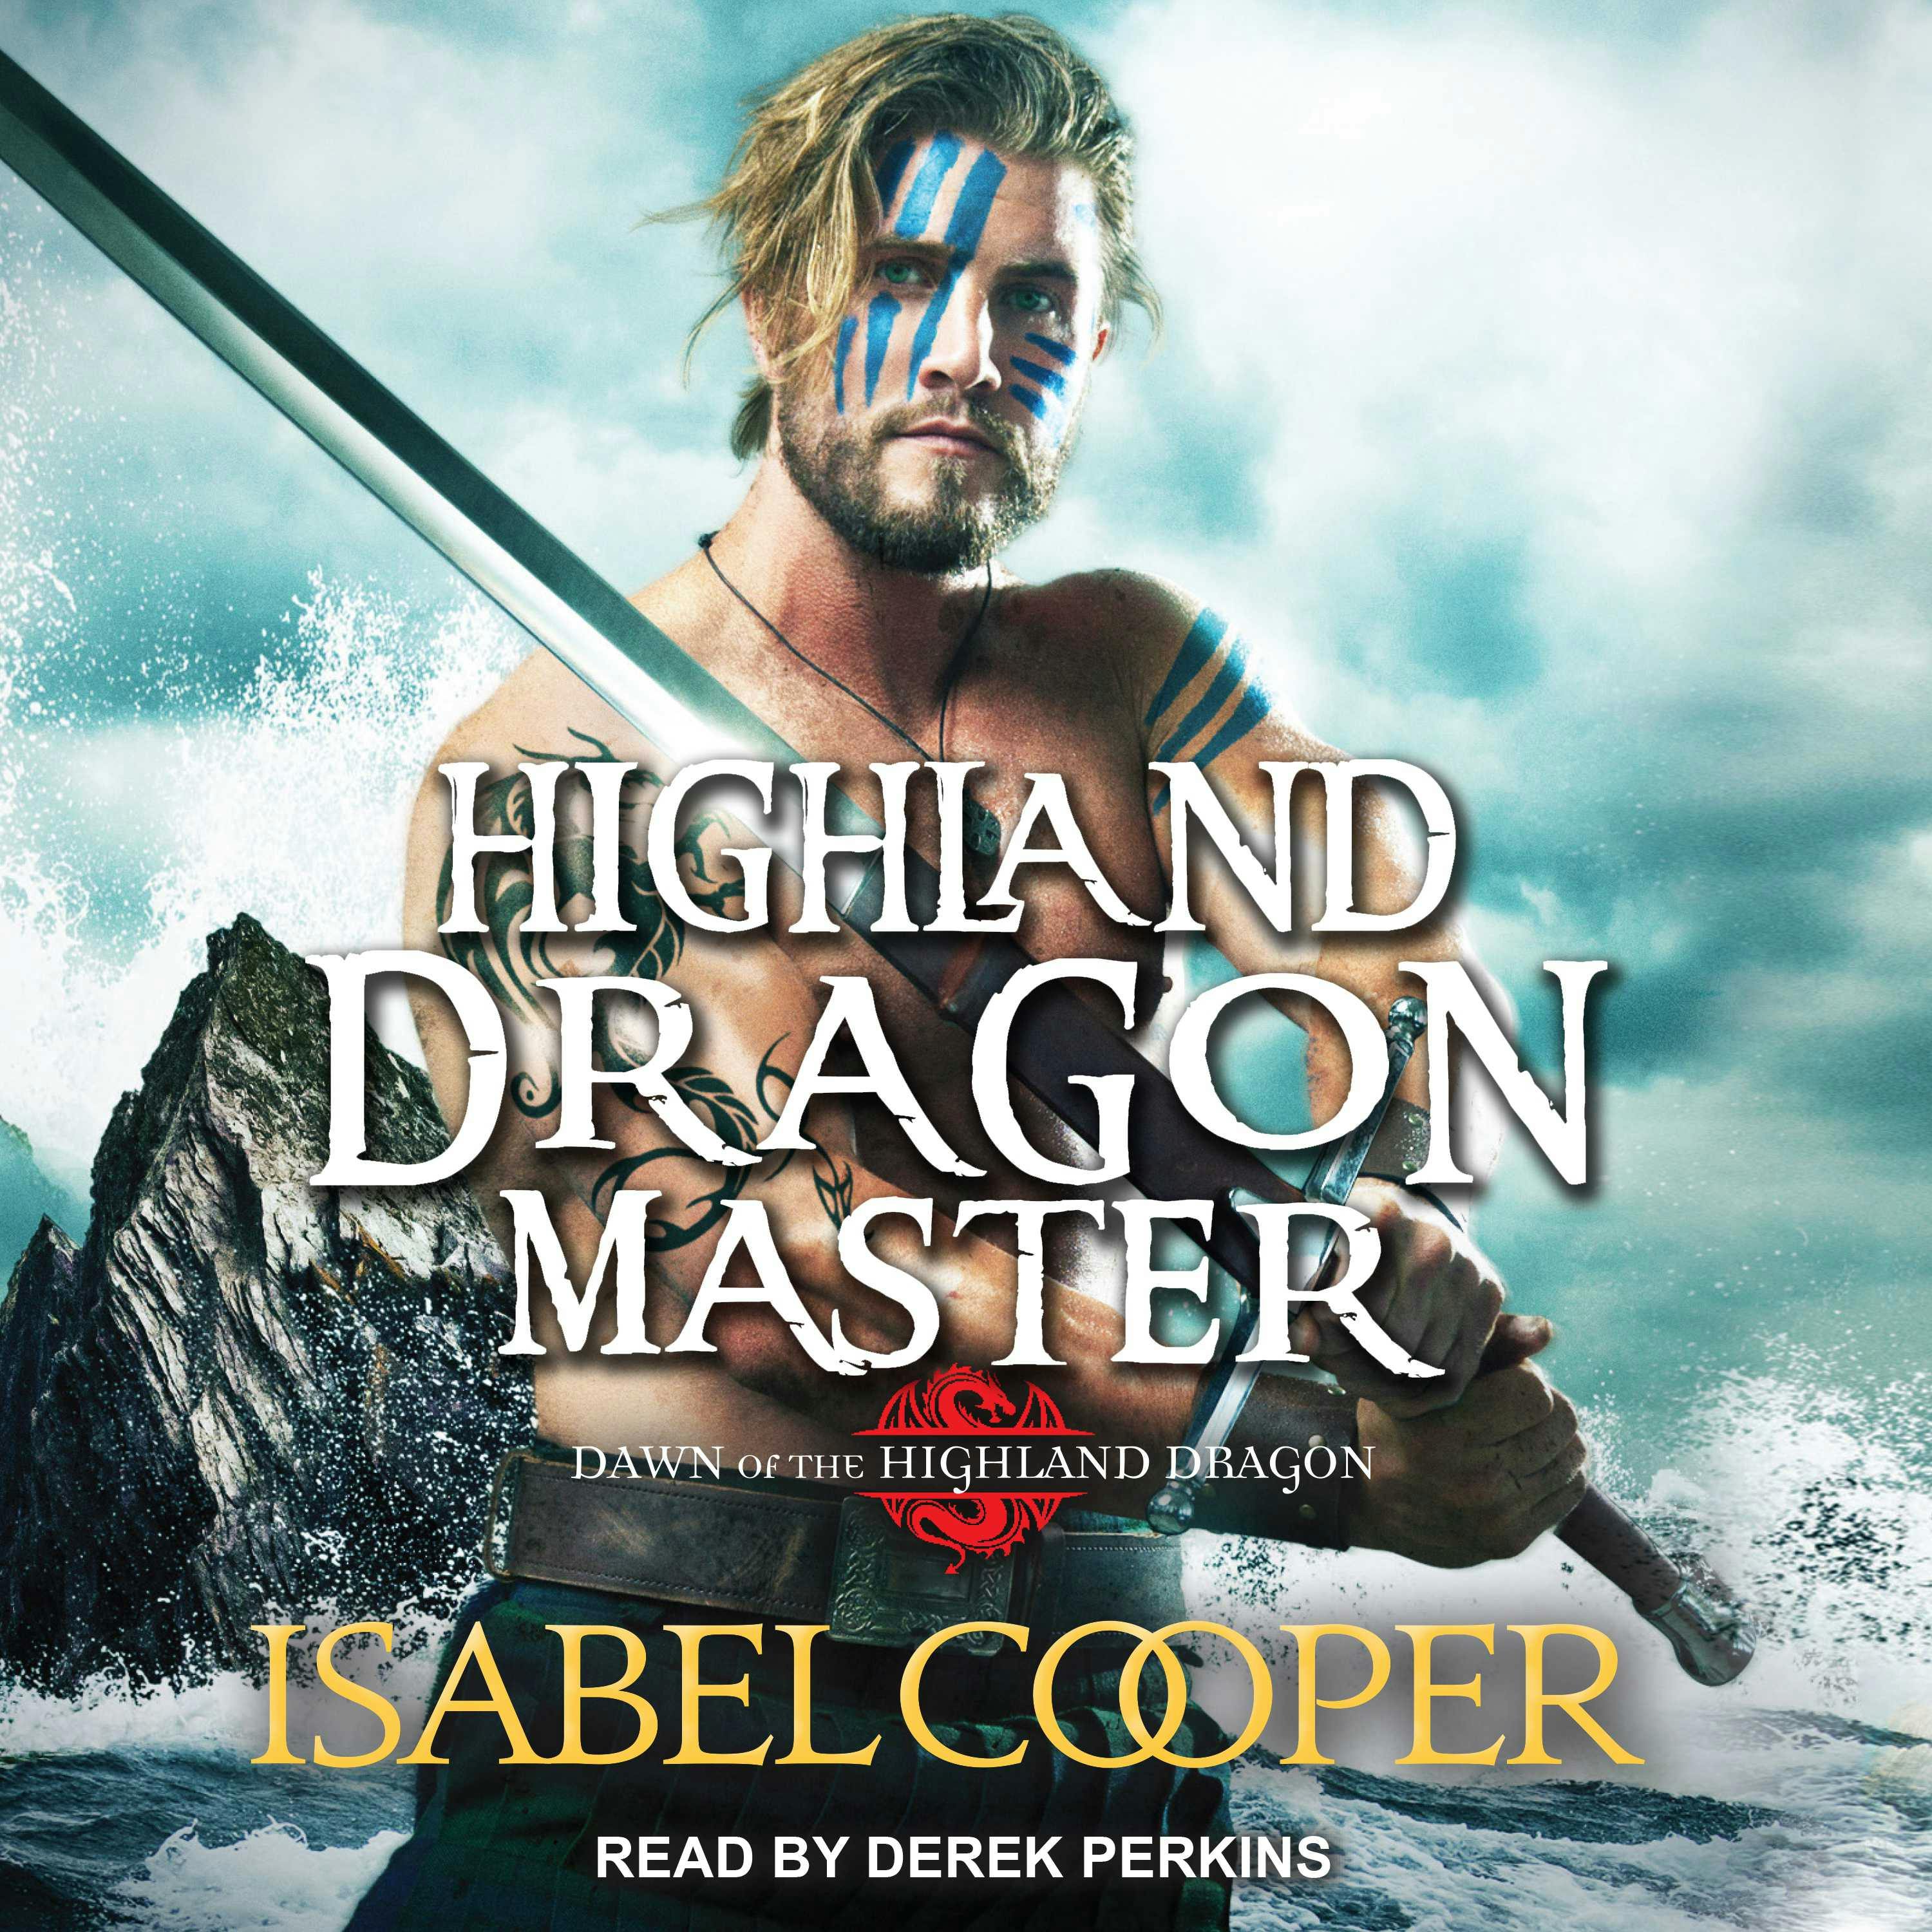 Highland Dragon Master - undefined